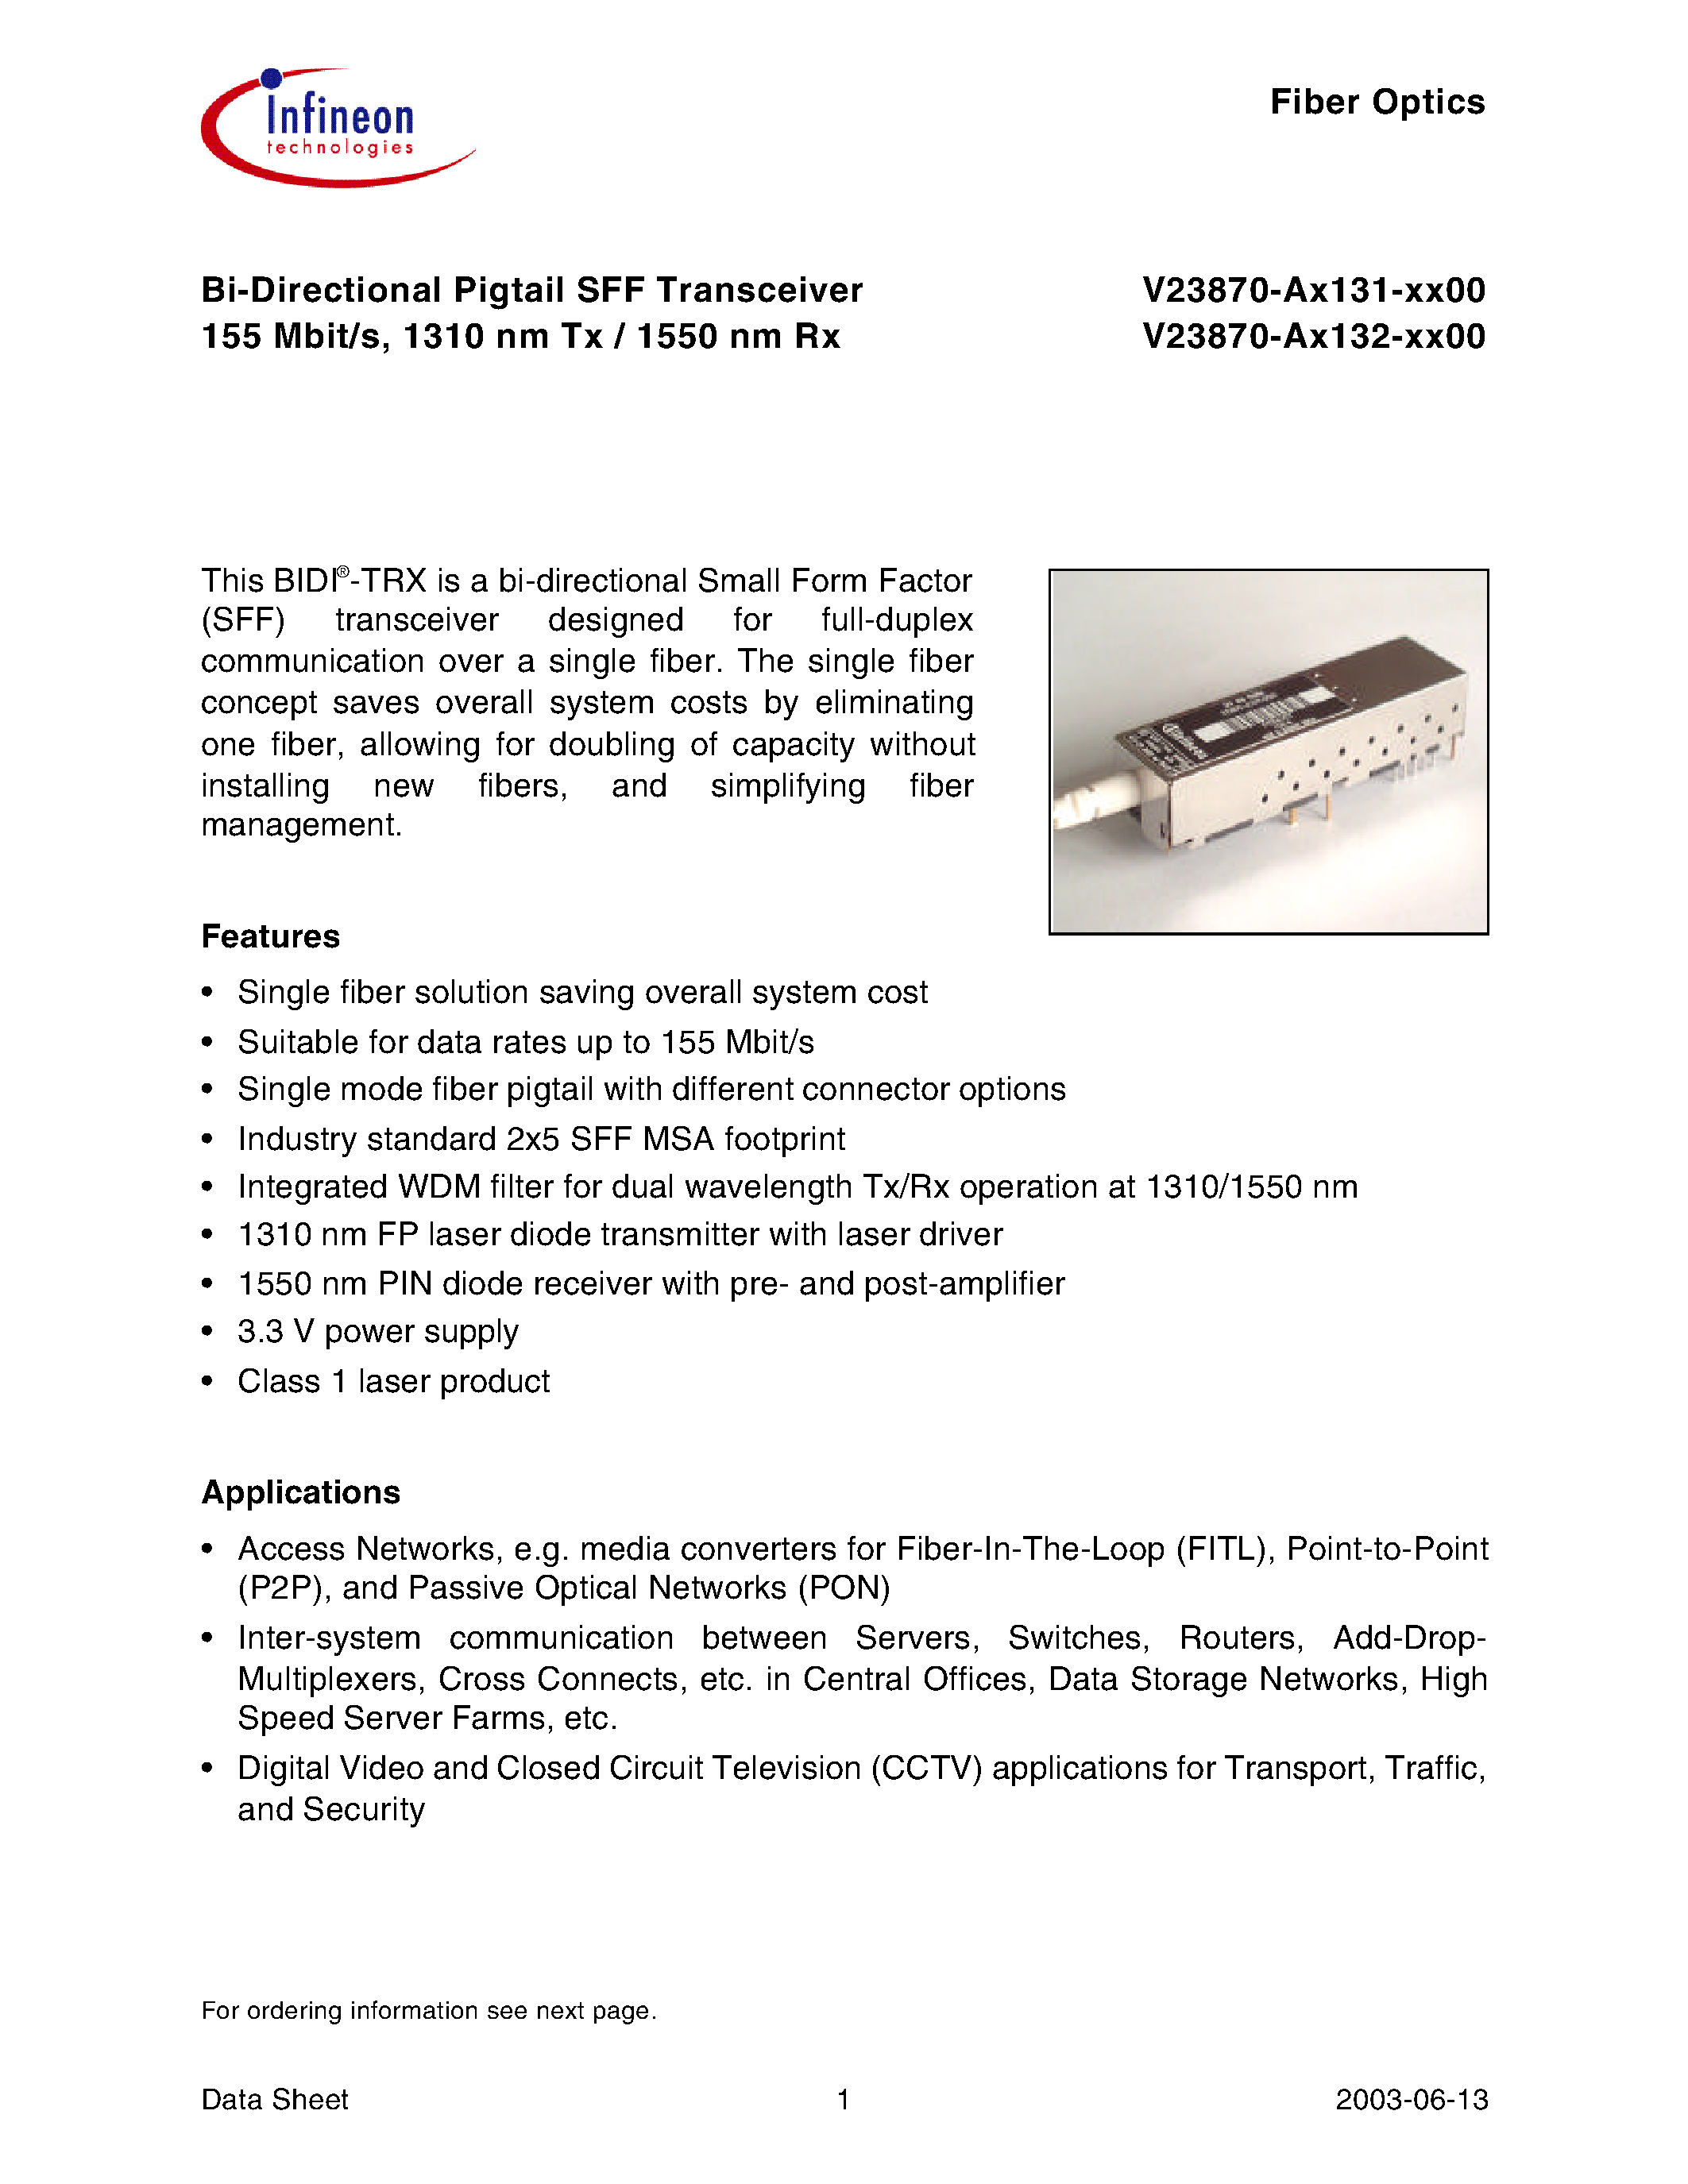 Даташит V23870-A3132-C200 - Bi-Directional Pigtail SFF Transceiver 155 Mbit/s/ 1310 nm Tx / 1550 nm Rx страница 1